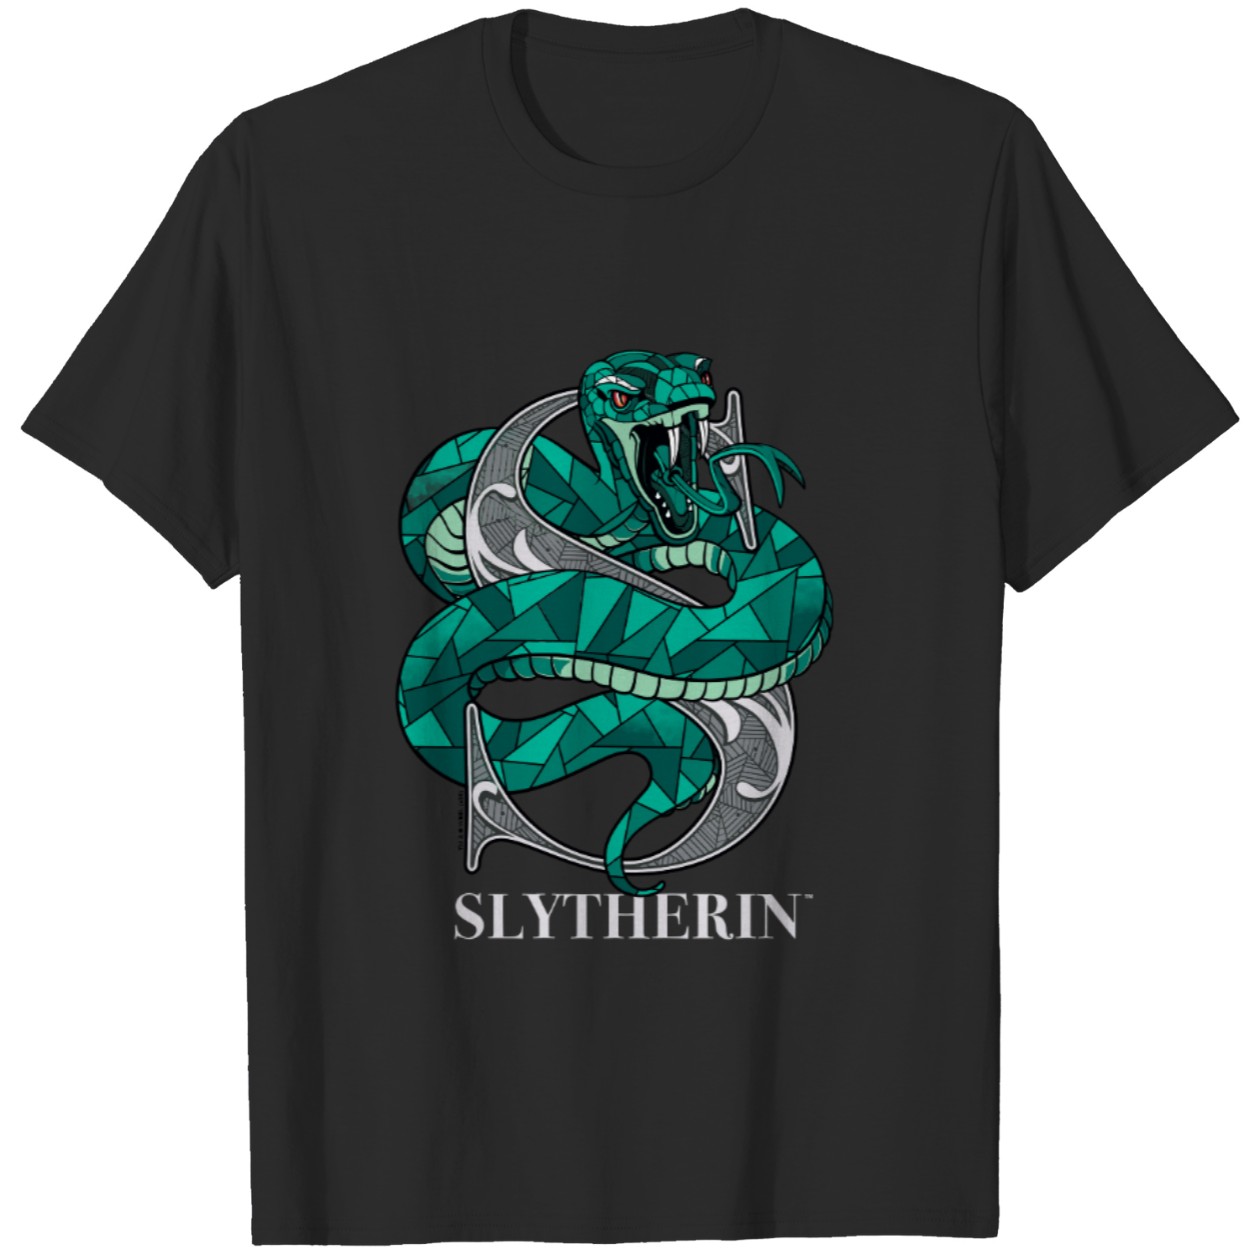 Get Noticed with Slytherin Crosshatched Emblem T-Shirt IYT